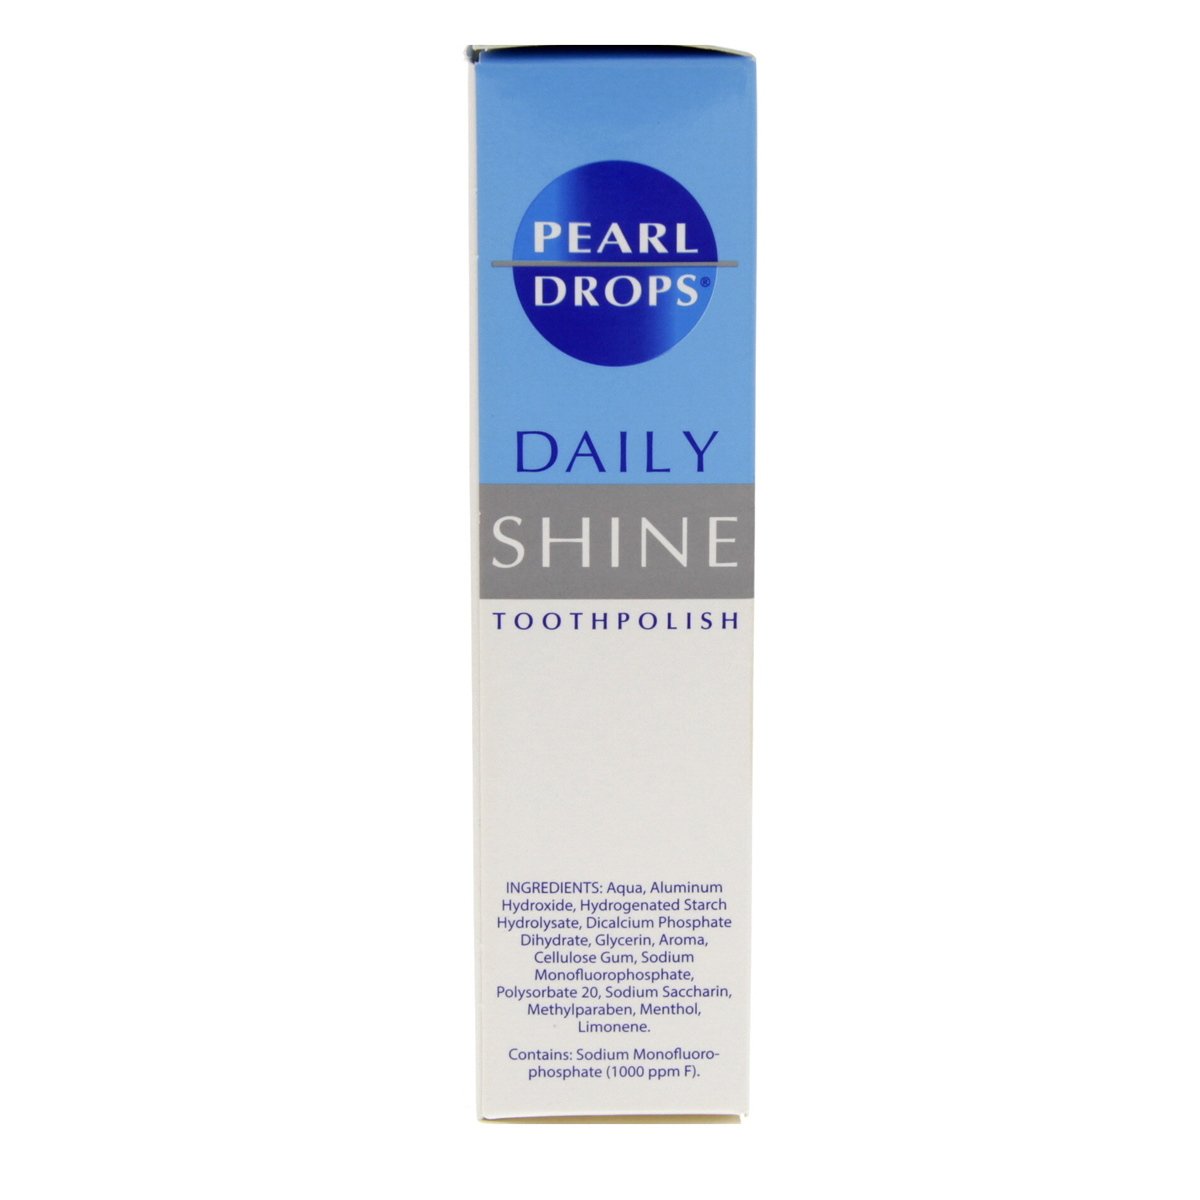 Pearl Drops Daily Shine Tooth Polish Freshmint 50 ml